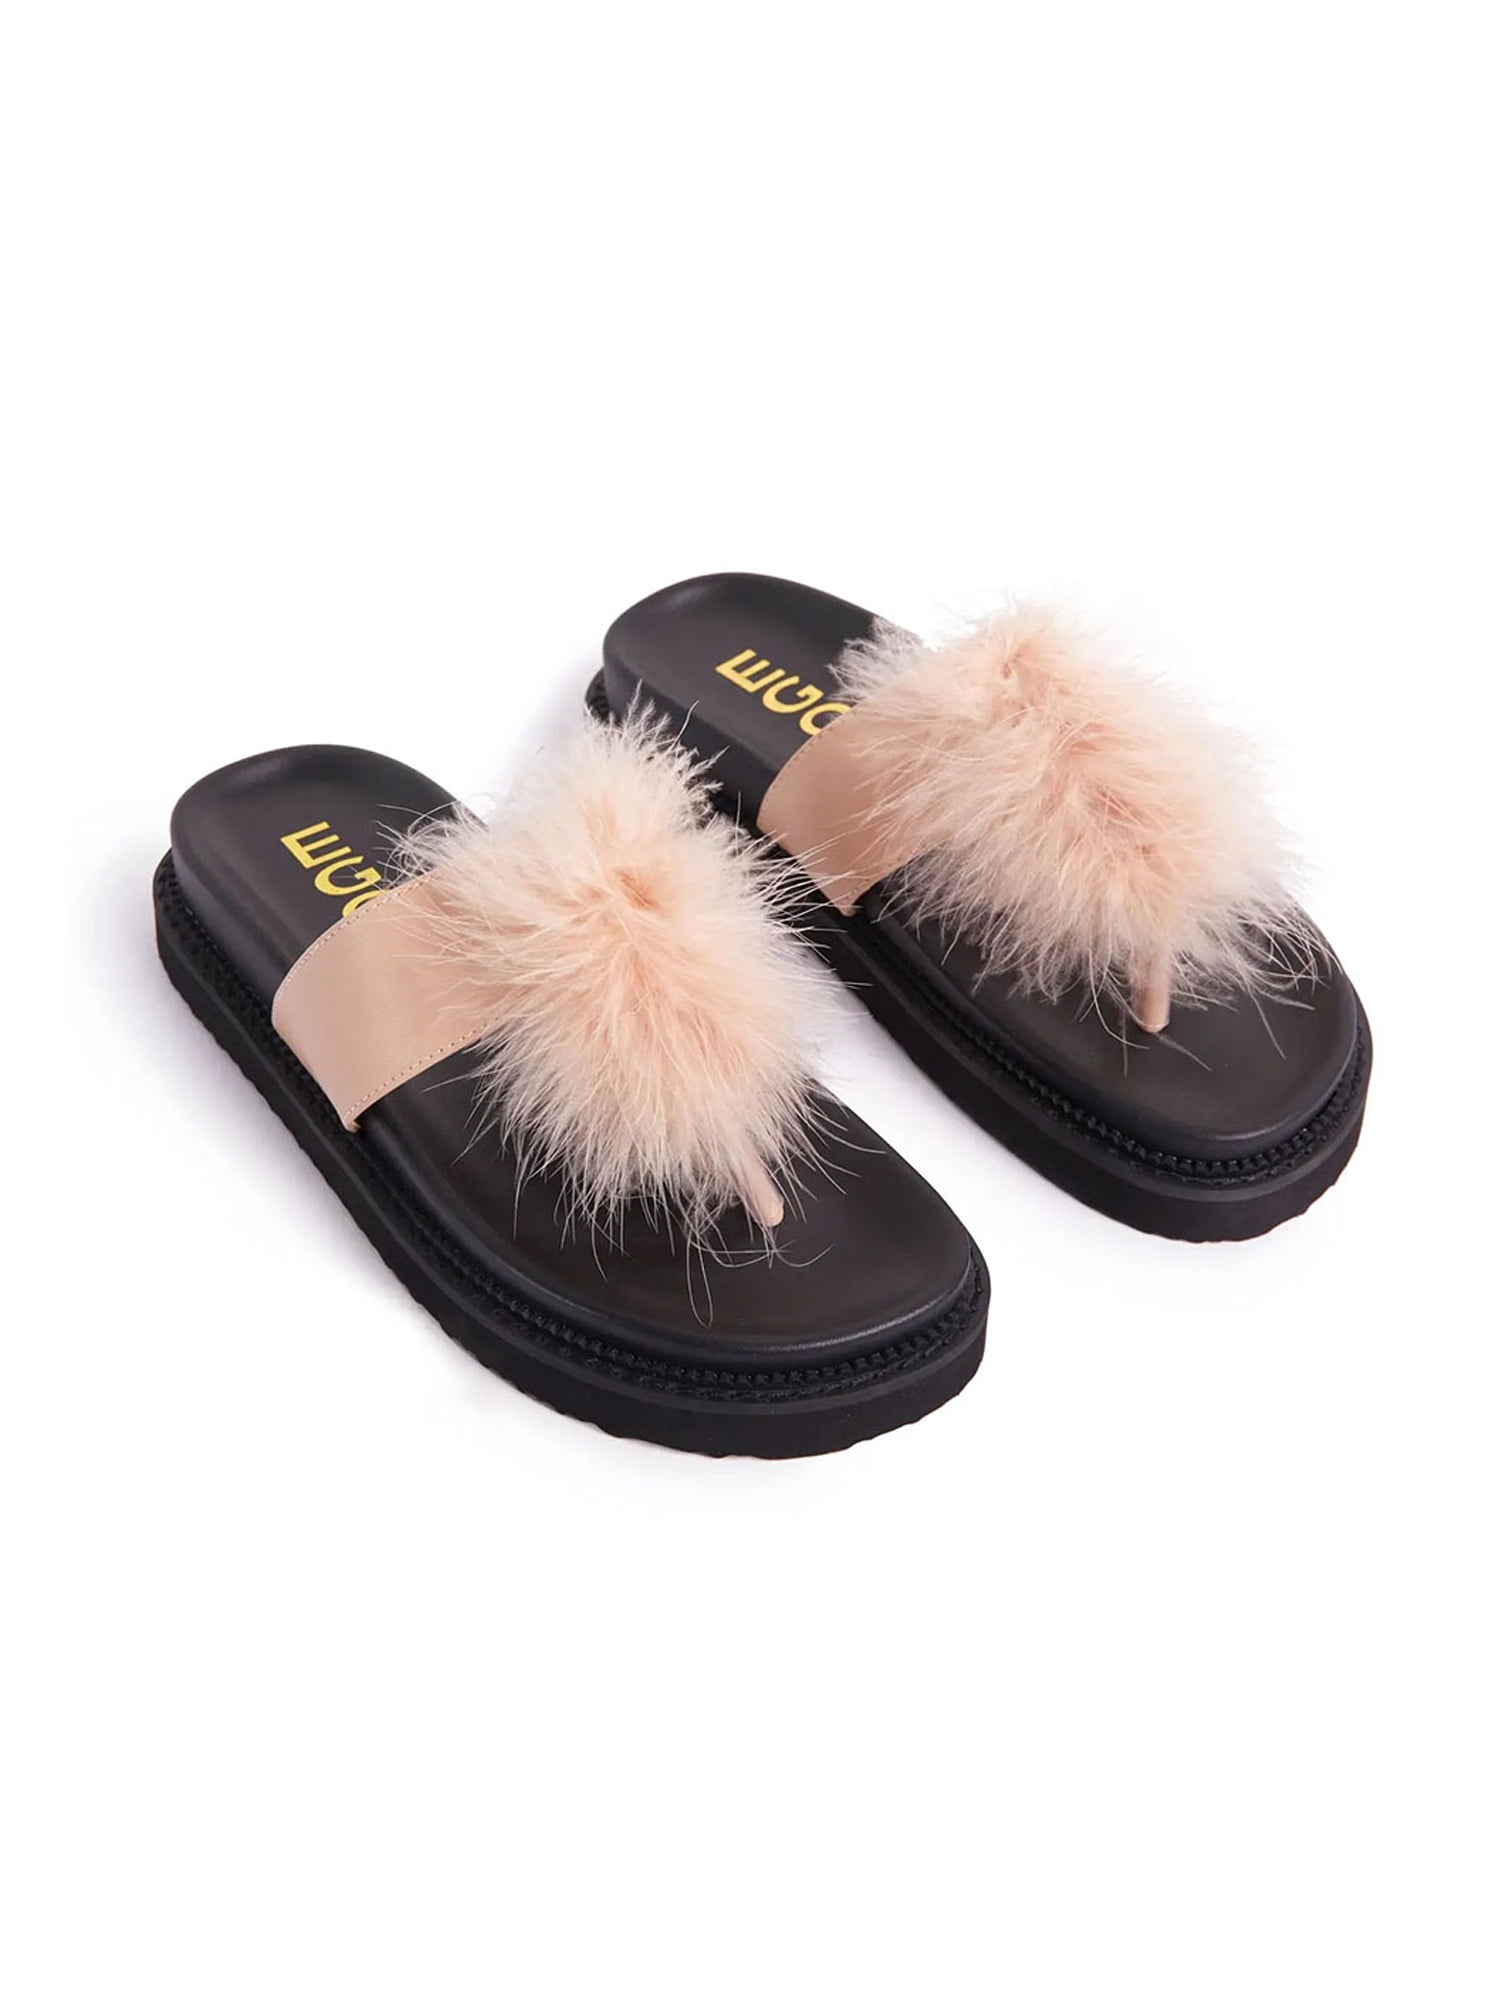 Fur Slippers Shoes Women Fashion Sliders Summer Sandals Flip Flops 